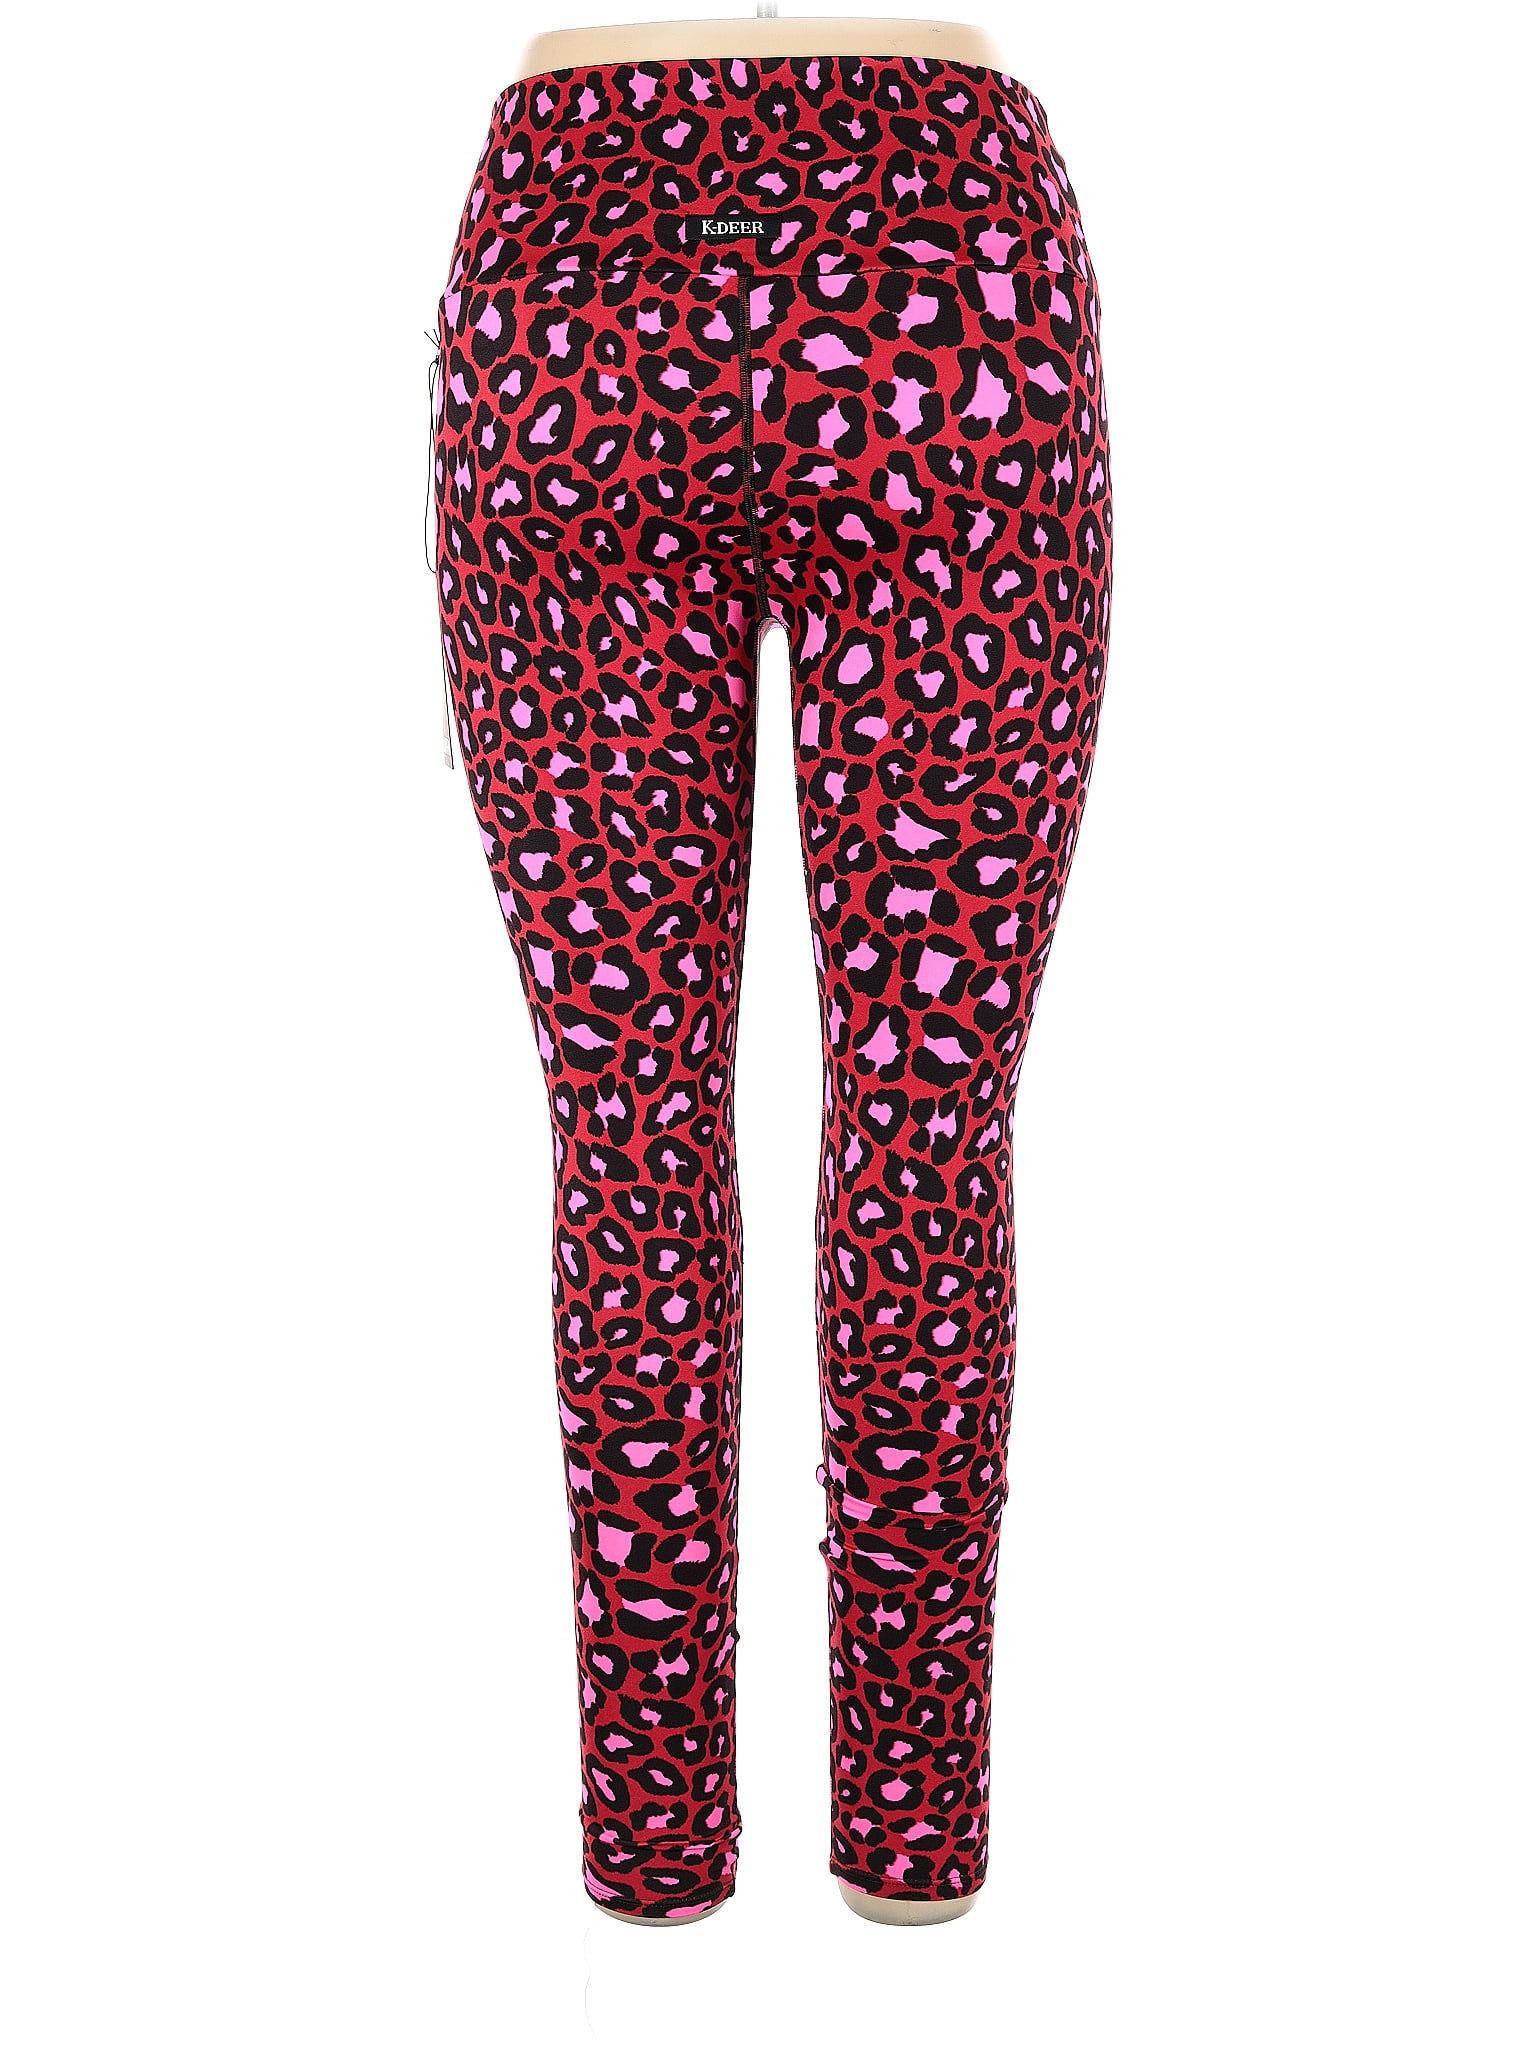 K-DEER Leopard Print Multi Color Pink Leggings Size 2X (Plus) - 68% off